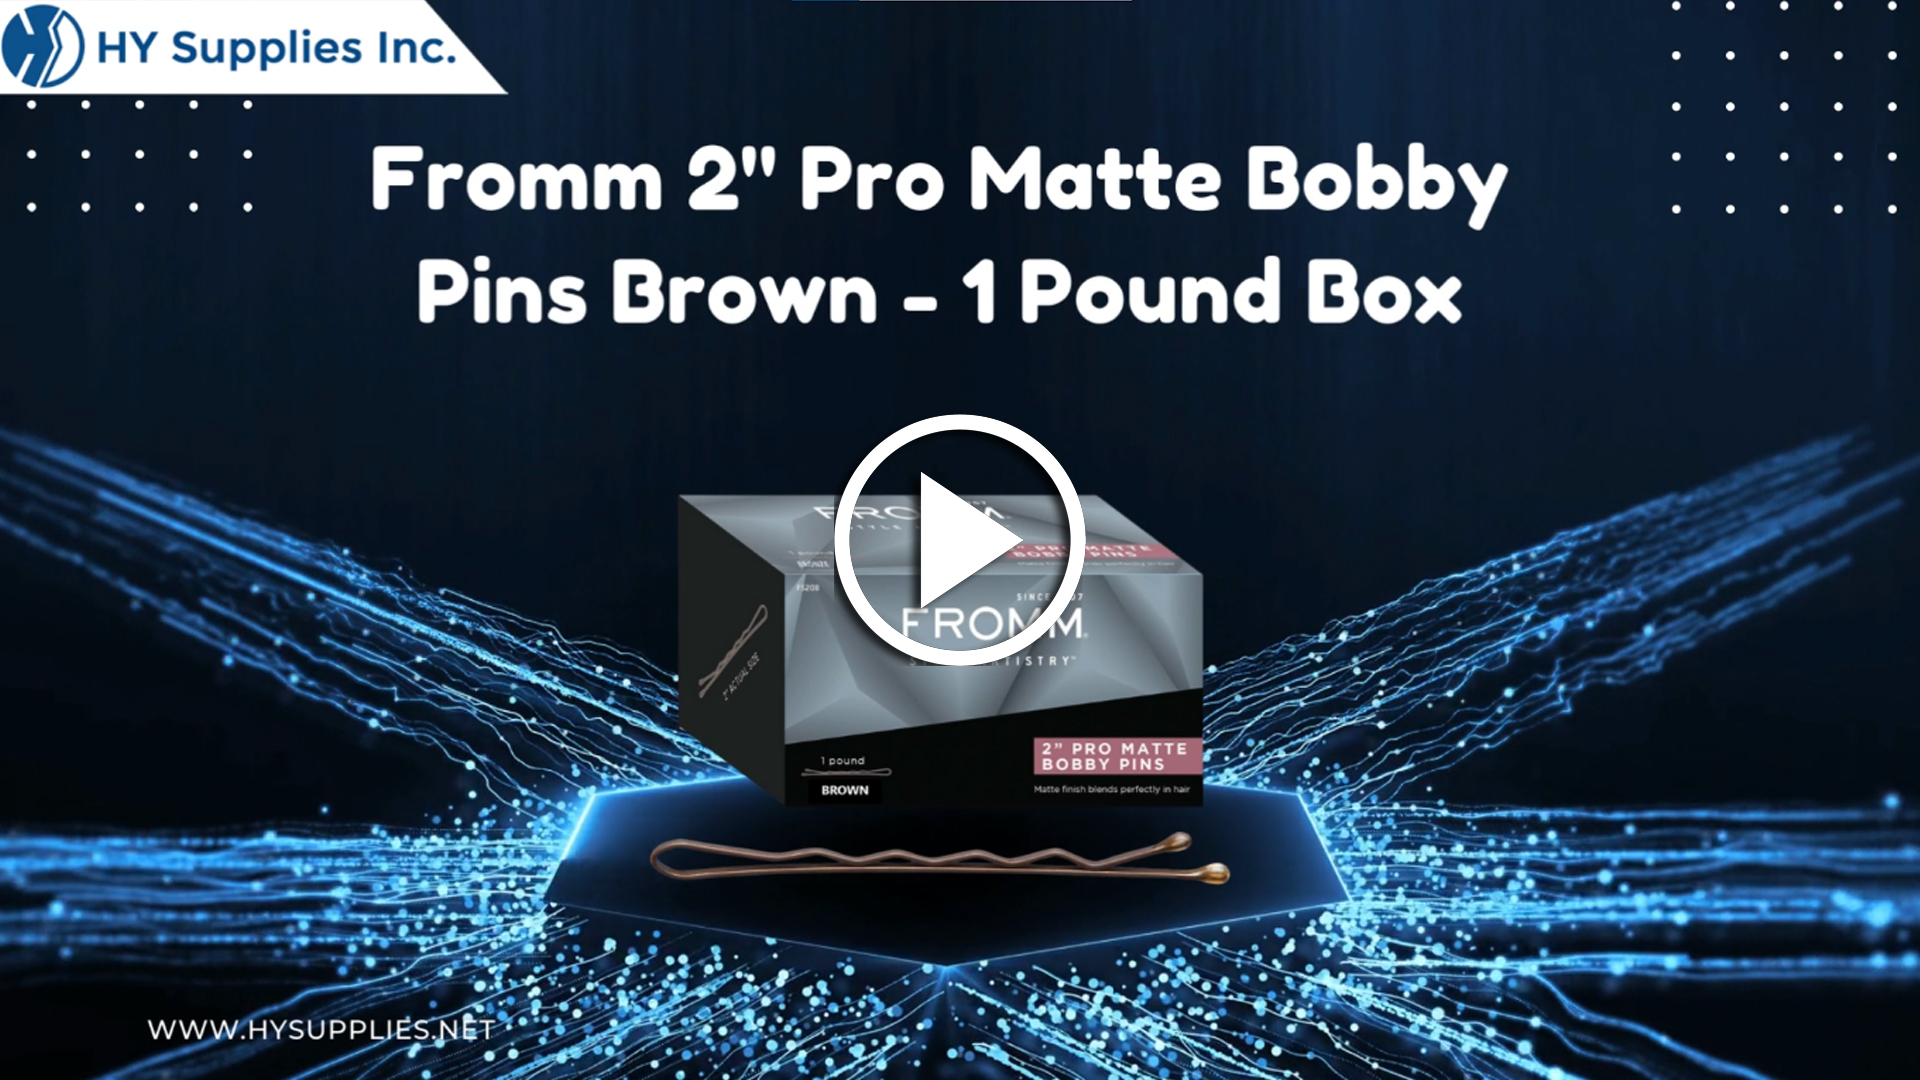 Fromm 2" Pro Matte Bobby Pins Brown - 1 Pound Box